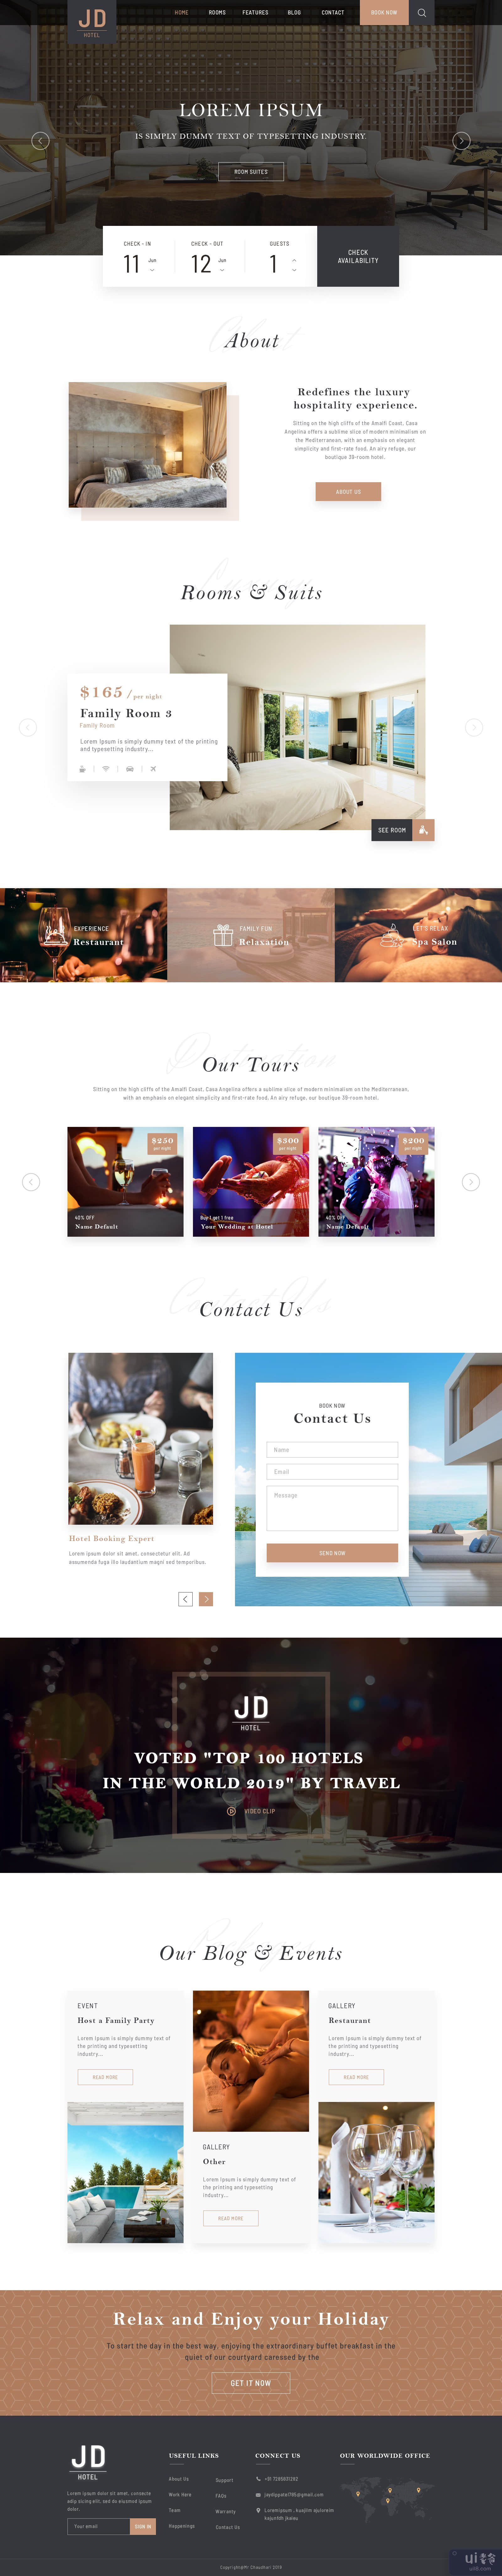 酒店网站设计(Hotel website design)插图